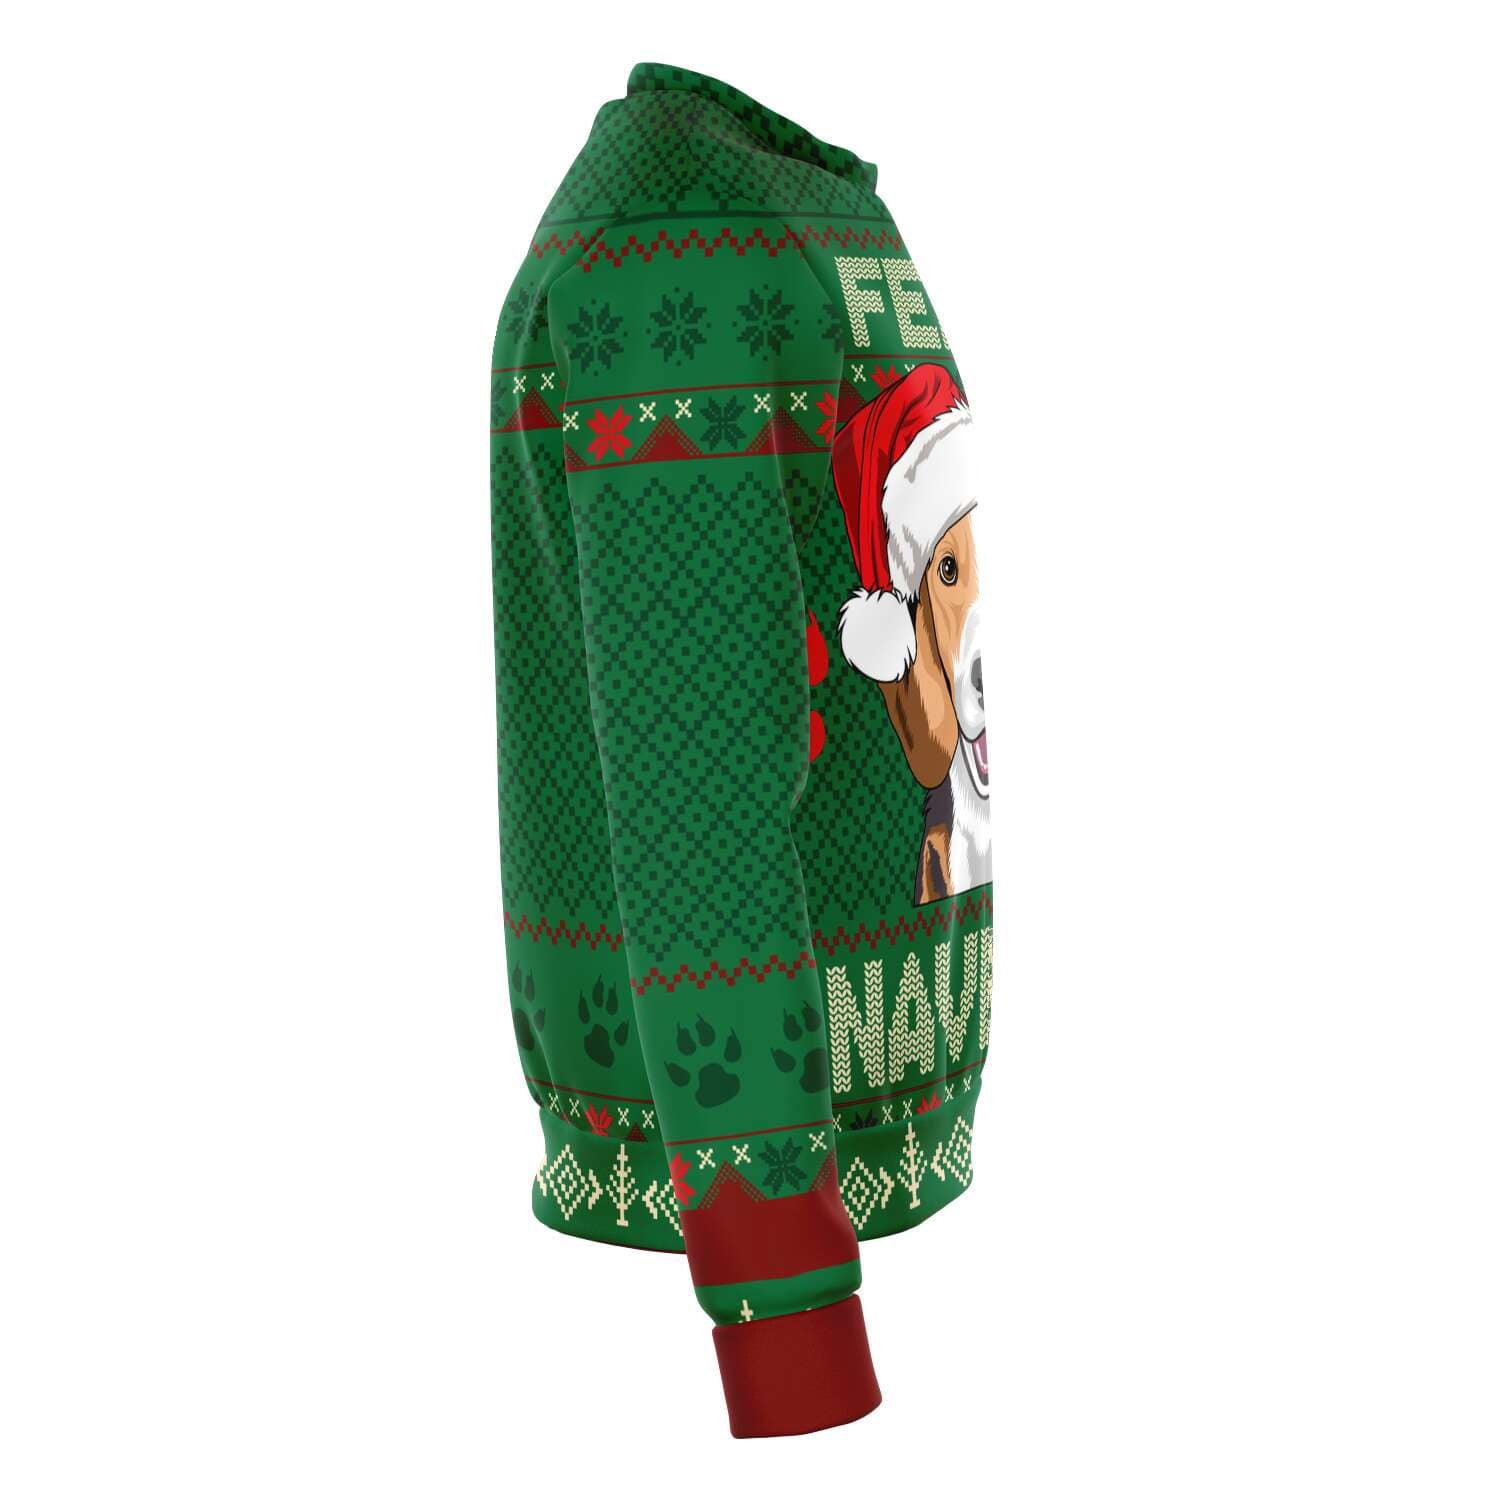 SUBLIMINATOR Feliz Navidog Beagle Ugly Christmas Sweaters Sweatshirt